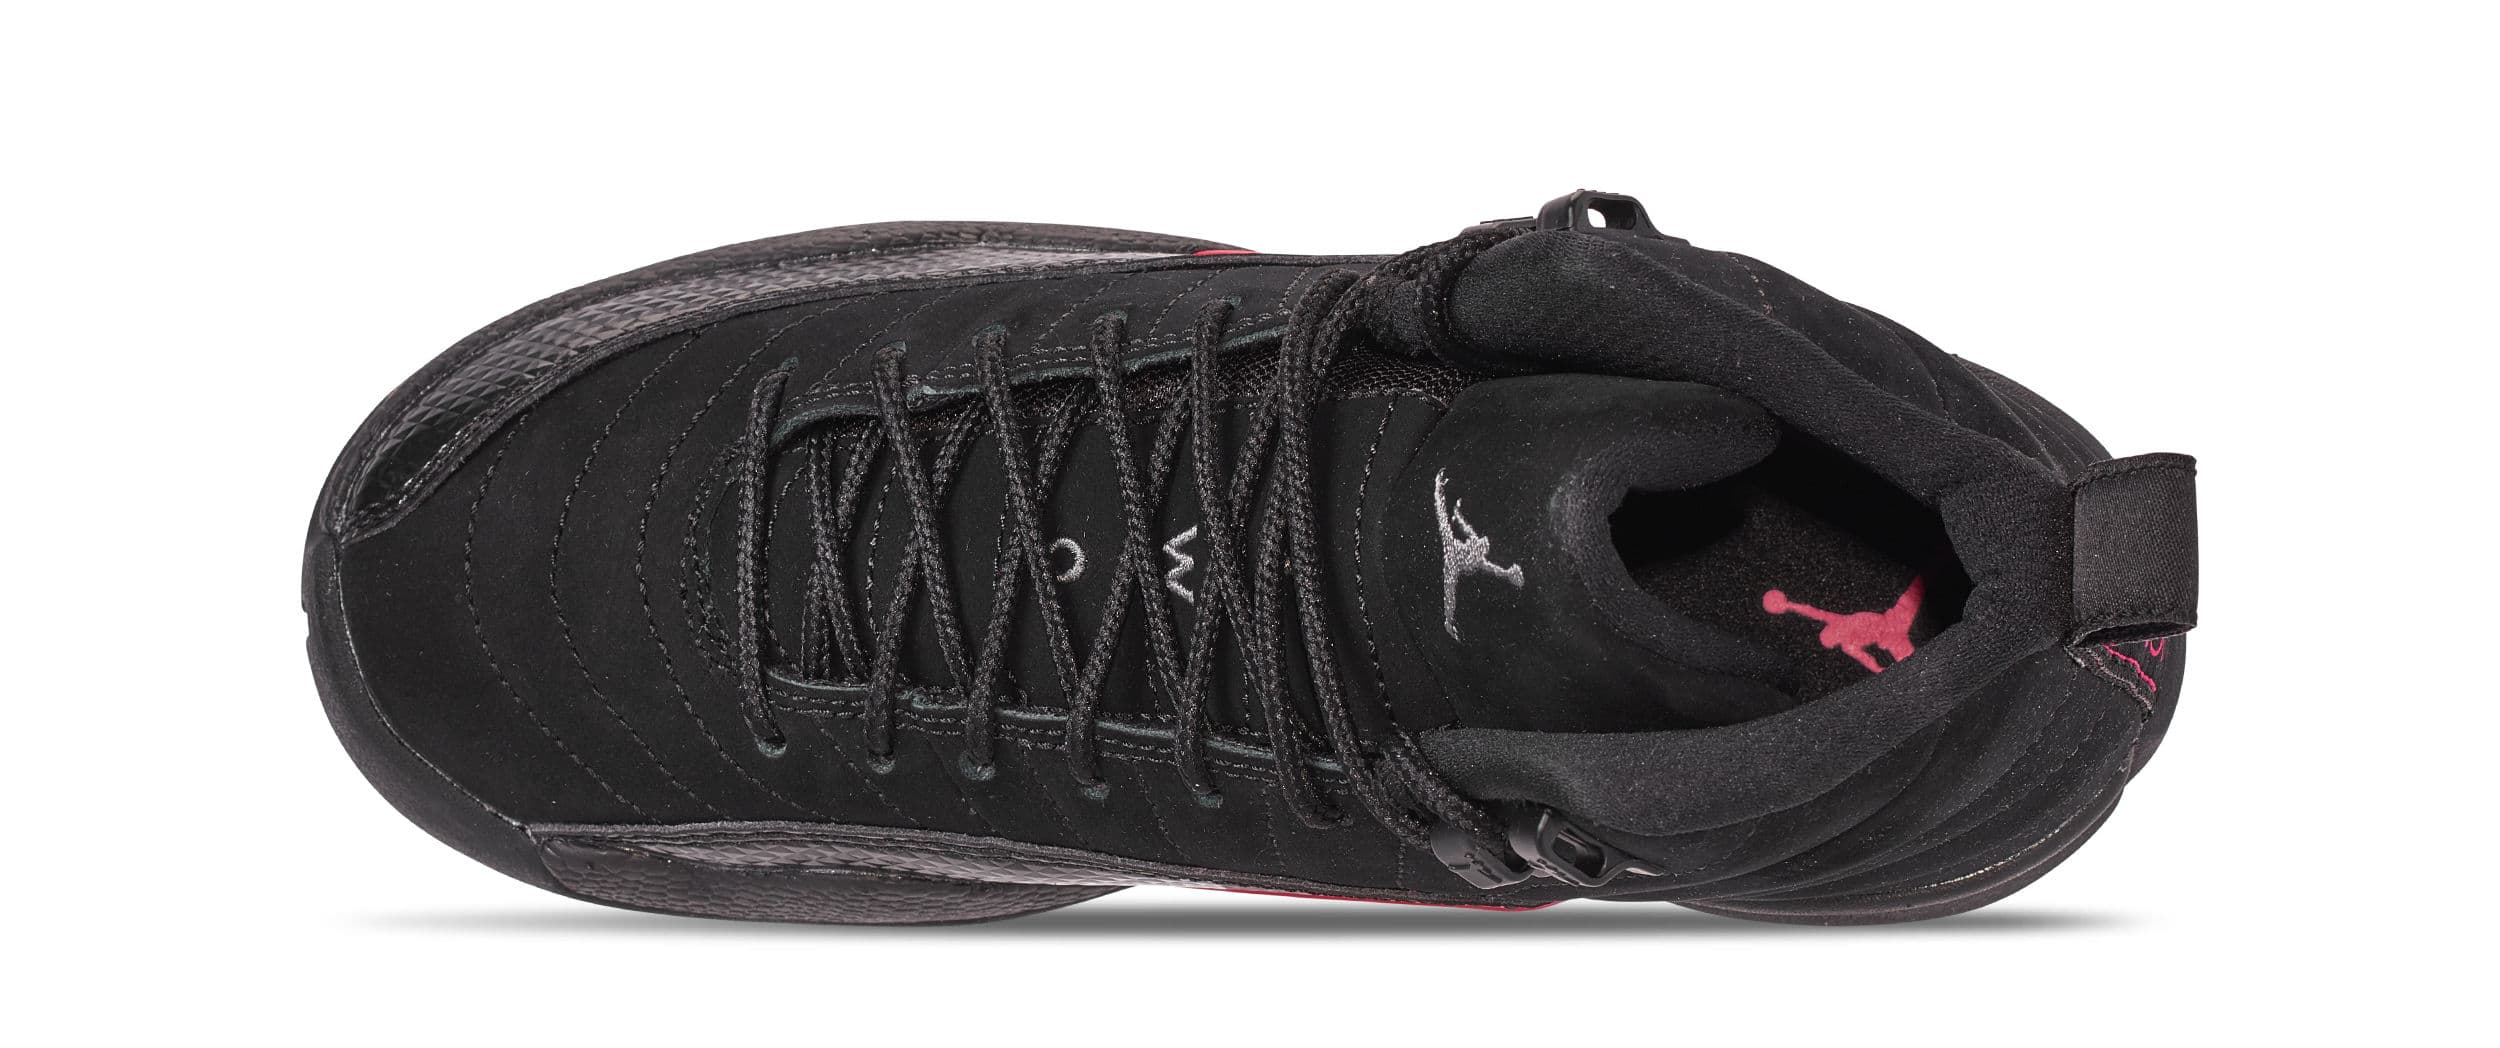 Air Jordan 12 Retro GG &#x27;Black/Dark Grey/Rush Pink&#x27; 510815-006 (Top)